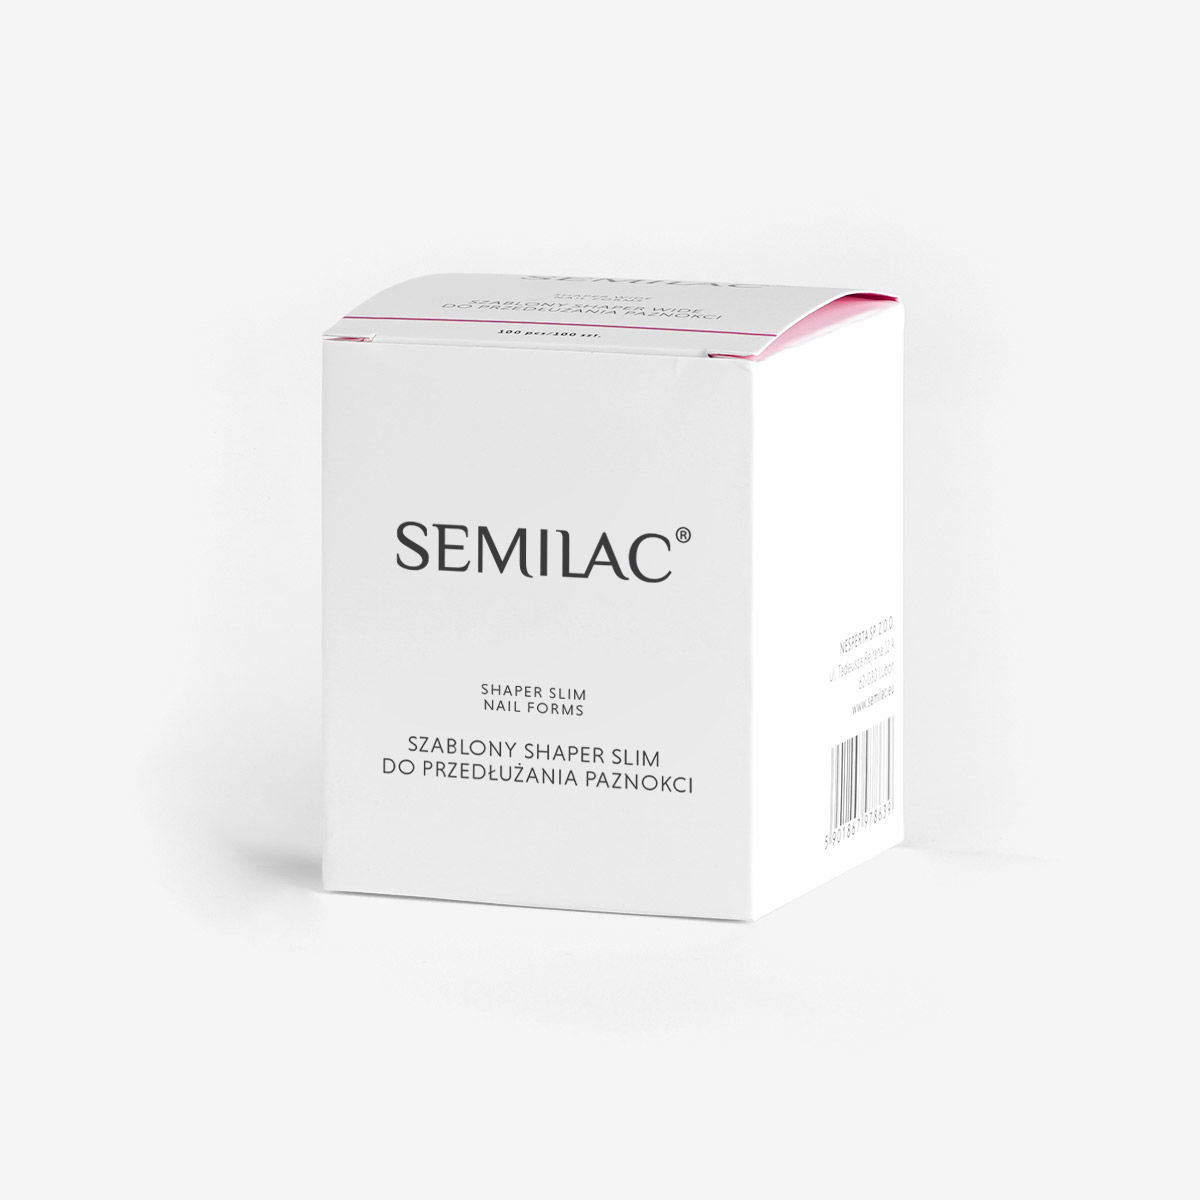 Semilac Shaper Slim Nail Forms - 100 szt.